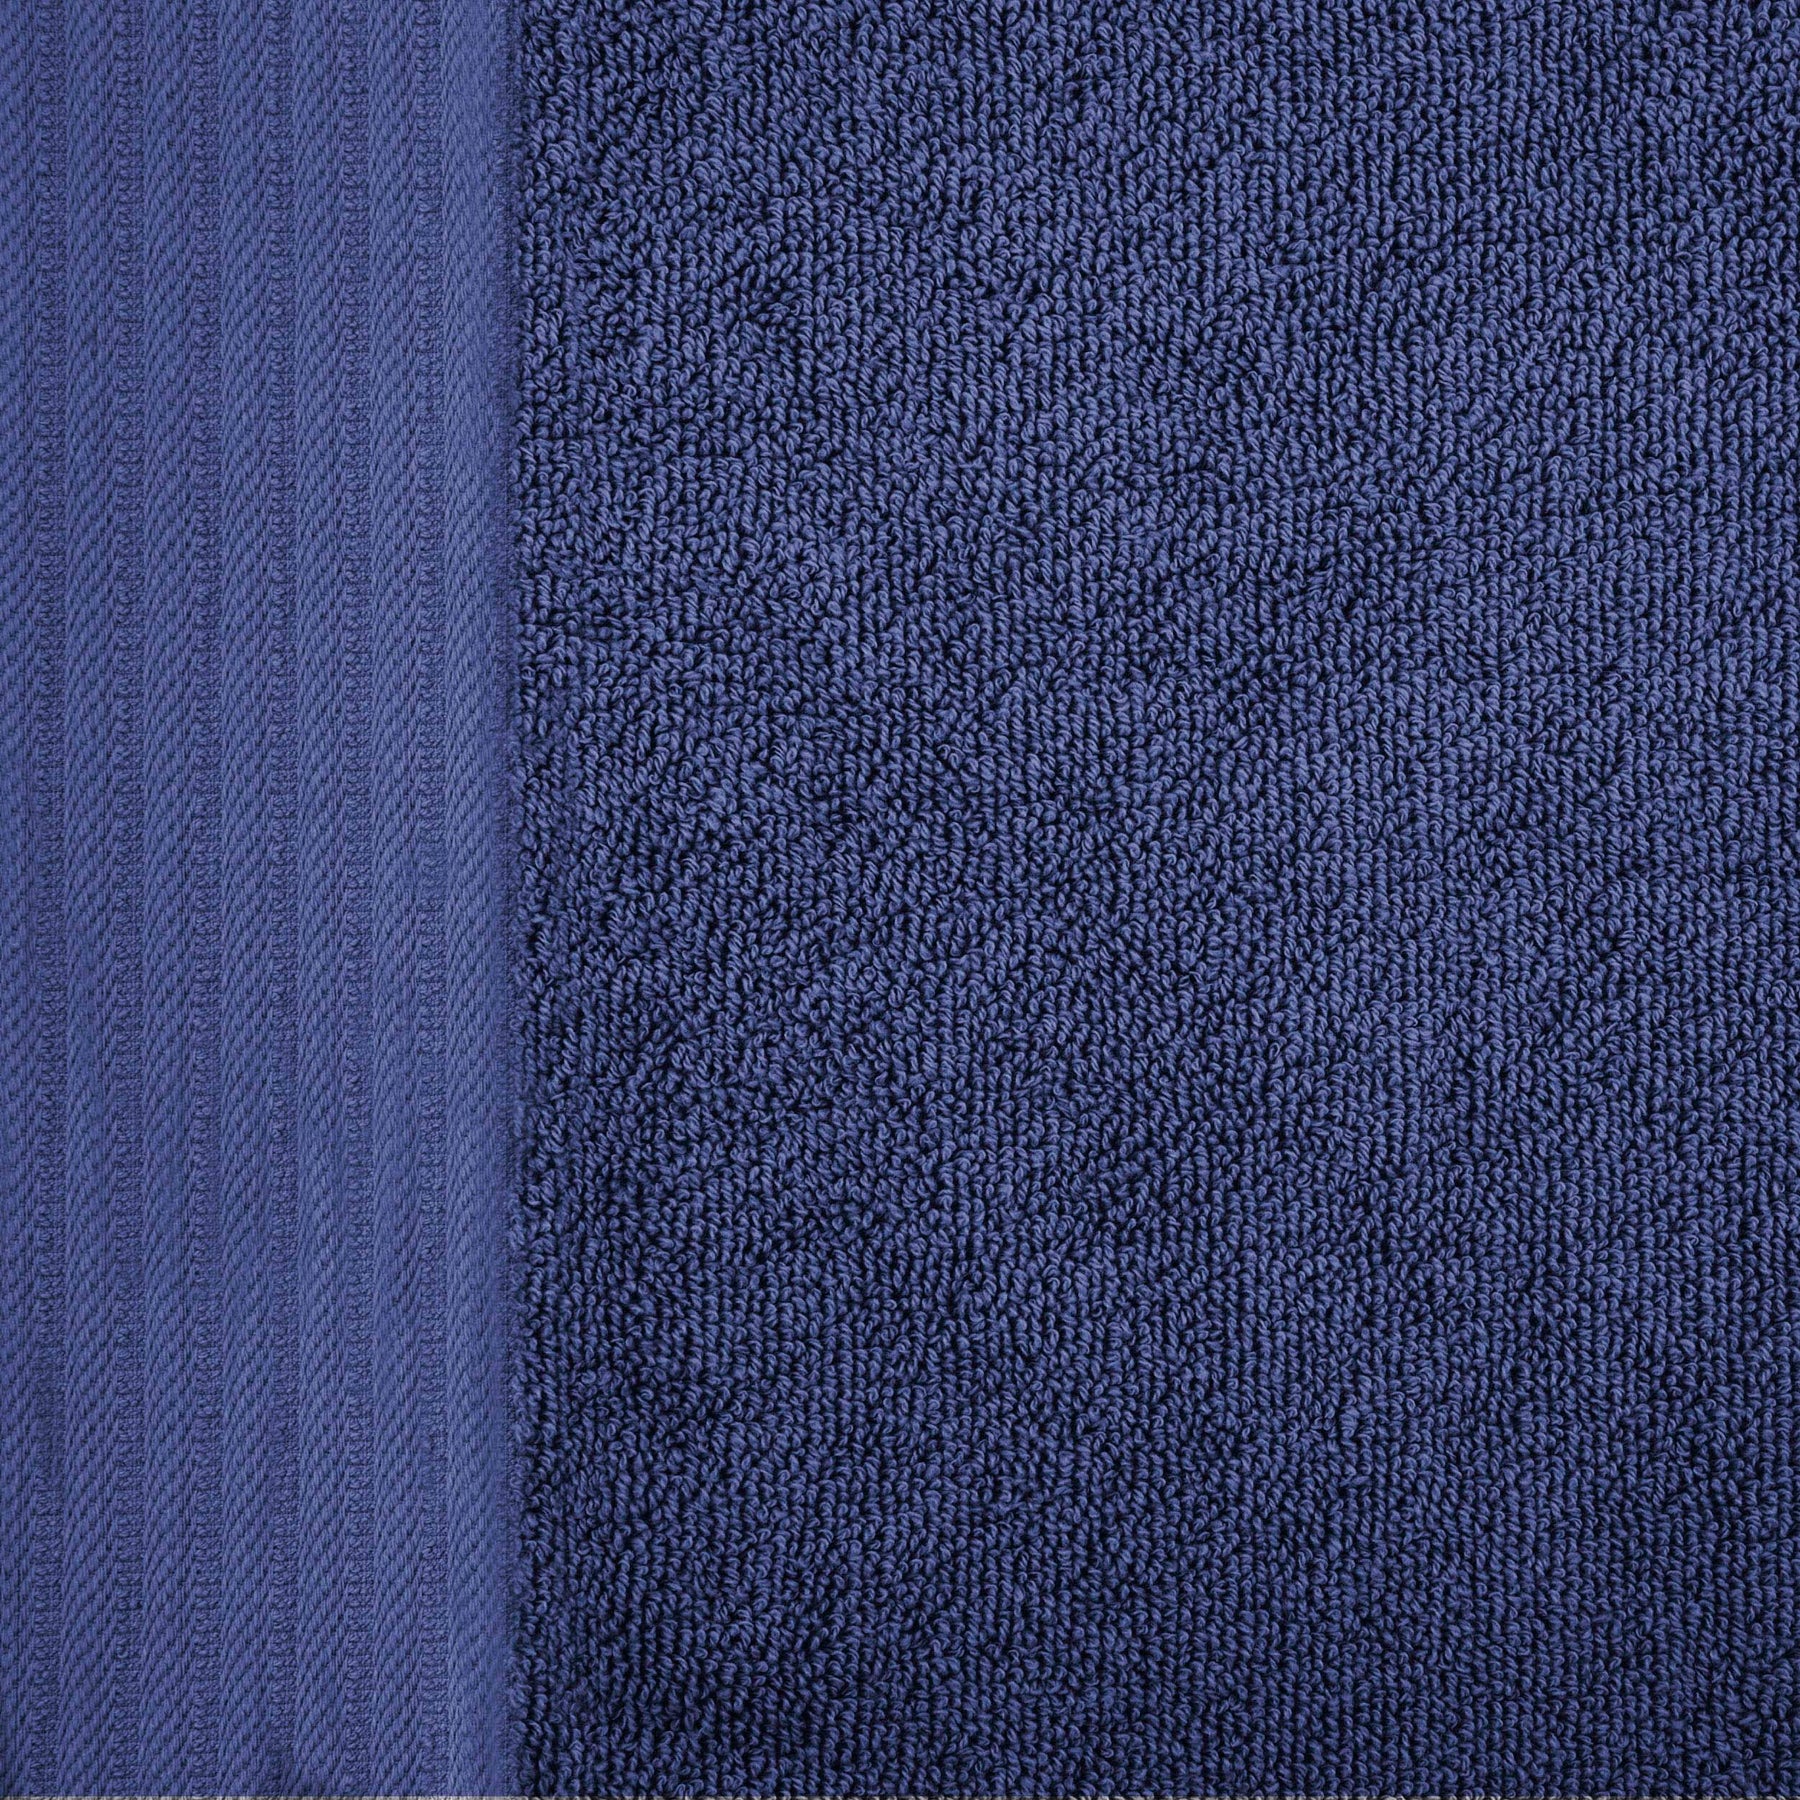 Premium Turkish Cotton Jacquard Herringbone and Solid 12-Piece Face Towel/ Washcloth Set - Navy Blue